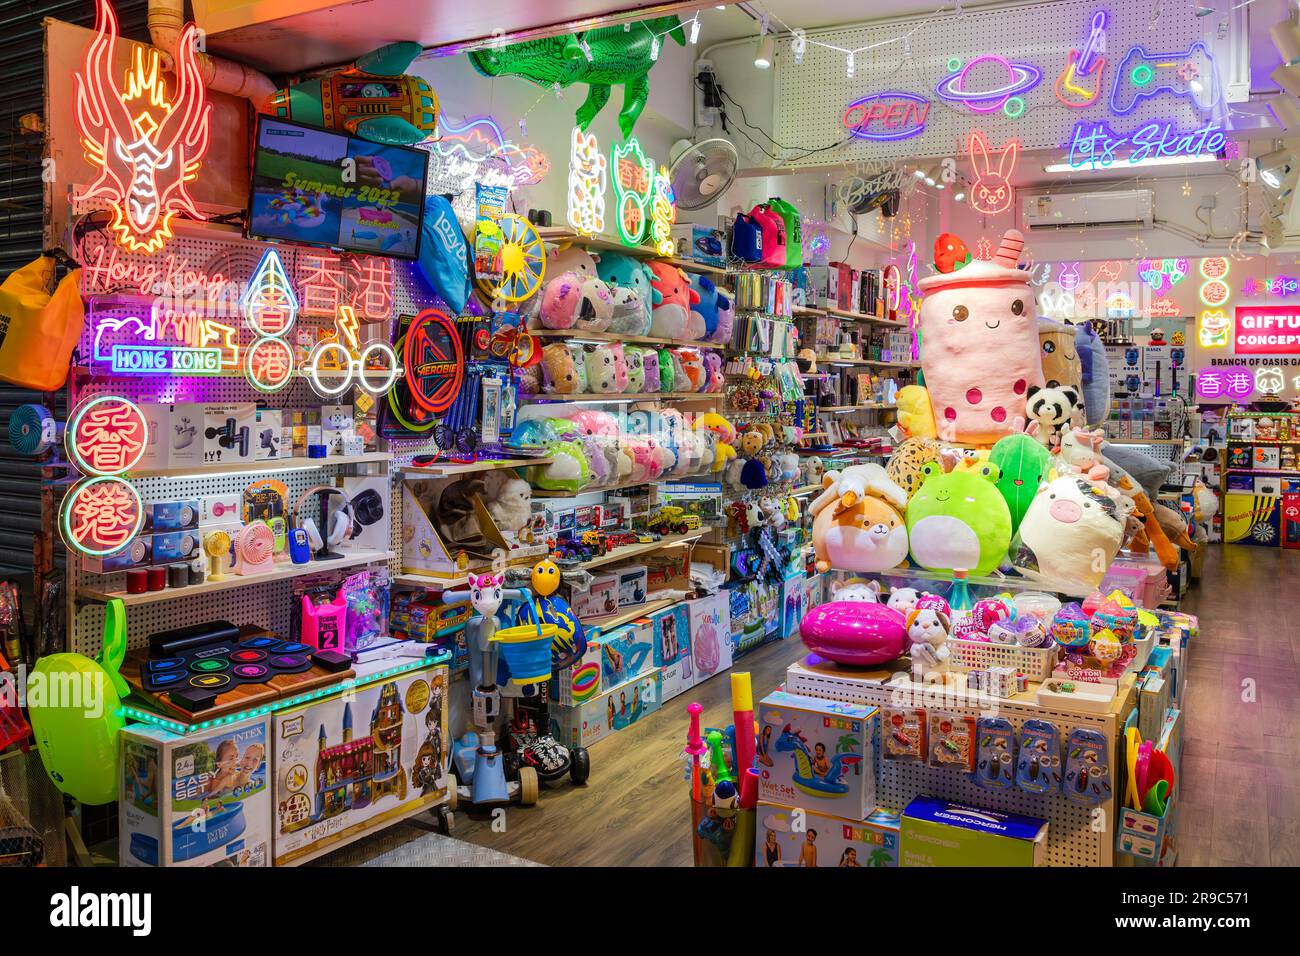 https://c8.alamy.com/comp/2R9C571/souvenir-shop-at-stanley-market-selling-neon-signs-and-toys-hong-kong-sar-china-2R9C571.jpg